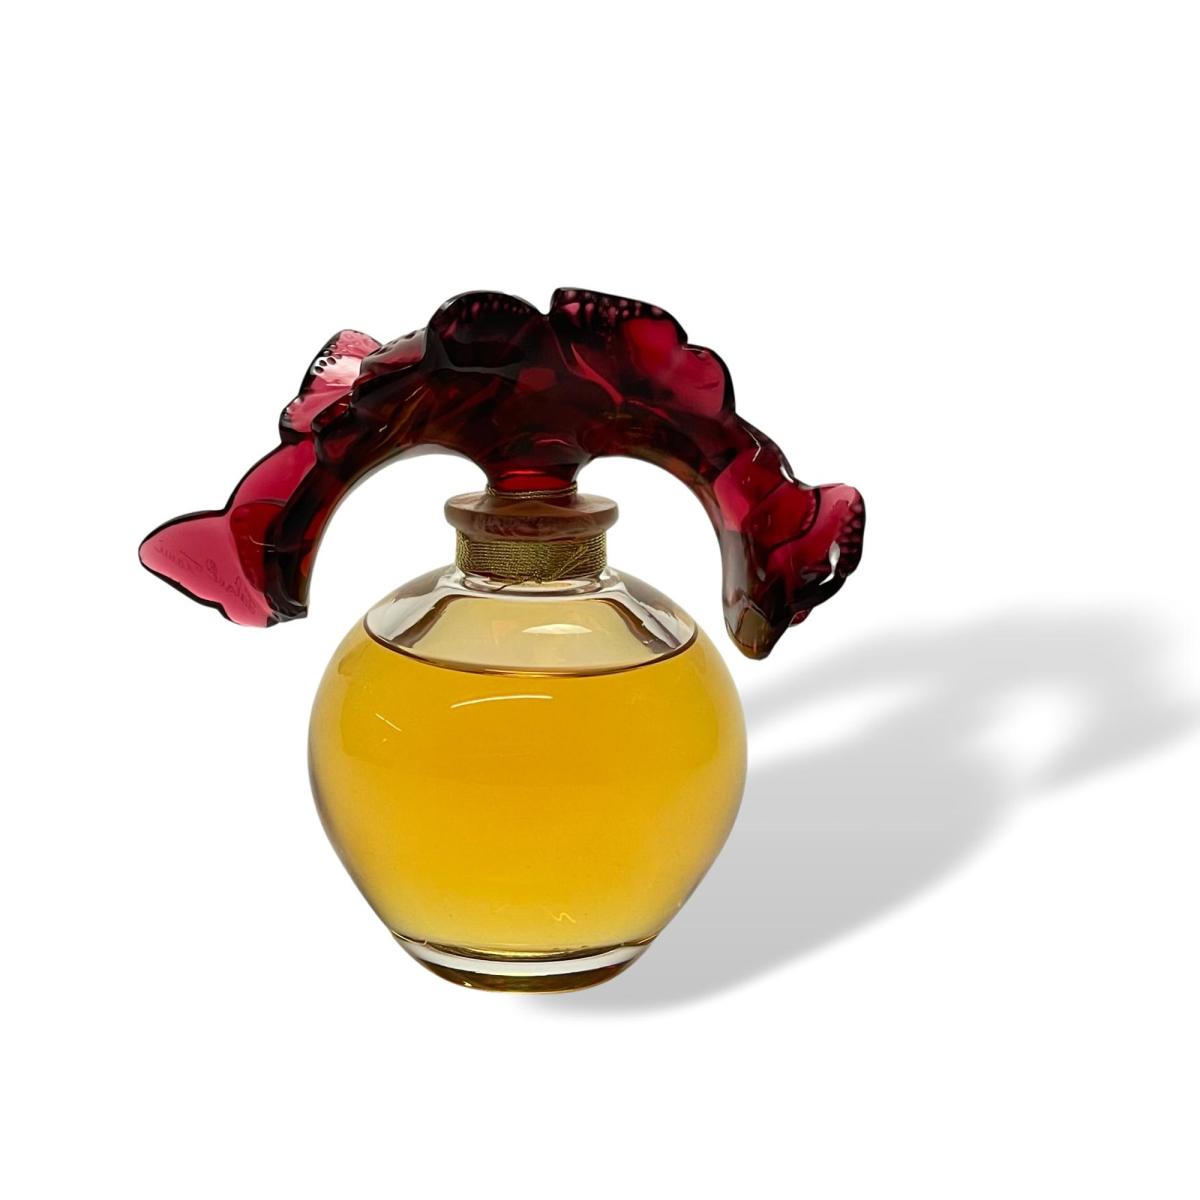 Limited Edition "Envol" Perfume Bottle by Marie Claude Lalique